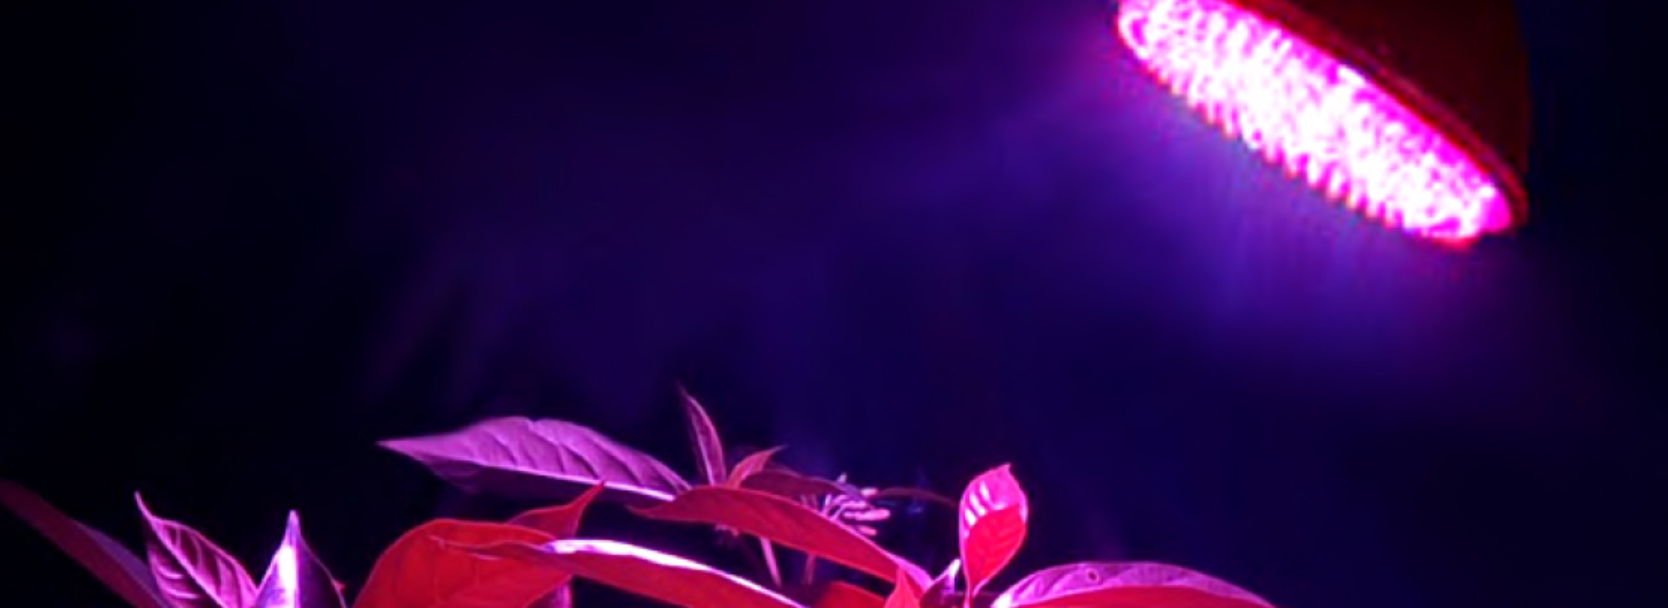 Lampa LED roślin